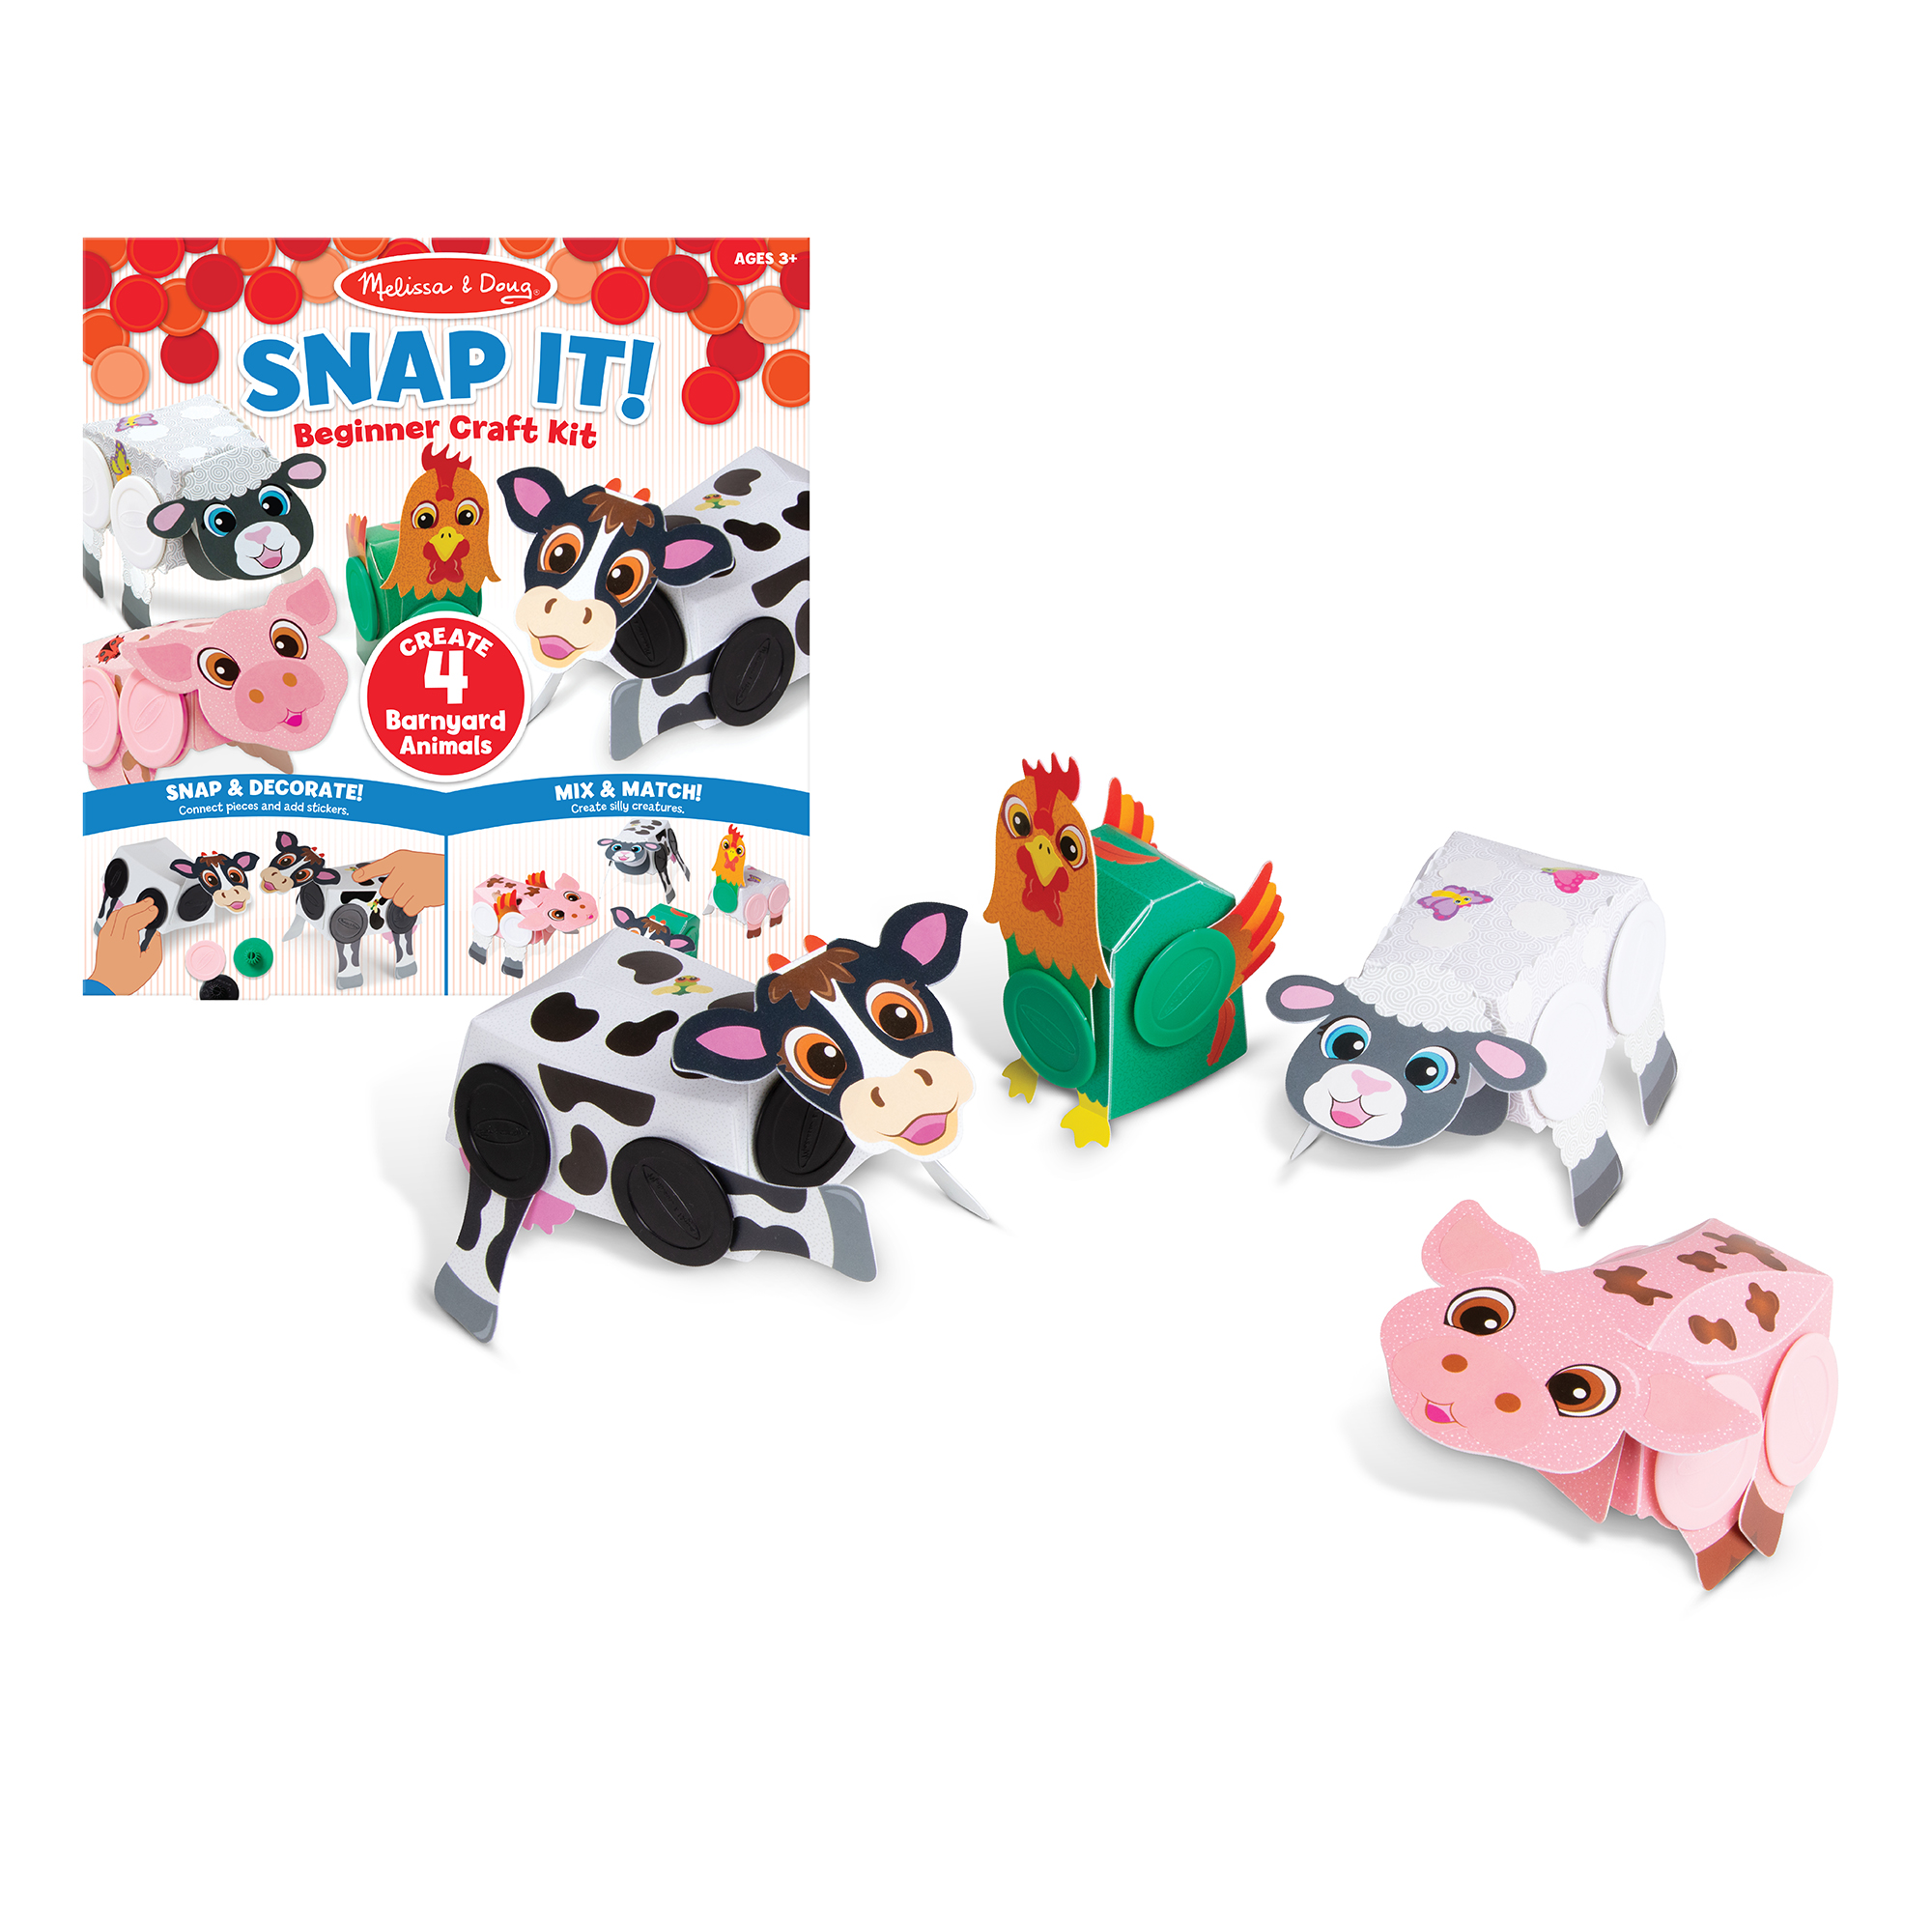 Melissa & Doug รุ่น 30196 Snap It! Beginner Craft Kit - Barnyard Animals ชุด DIY ประดิษฐ์สัตว์ด้วย Snap-it ทุกอย่างจะลงล๊อก สแน๊บเข้ารู